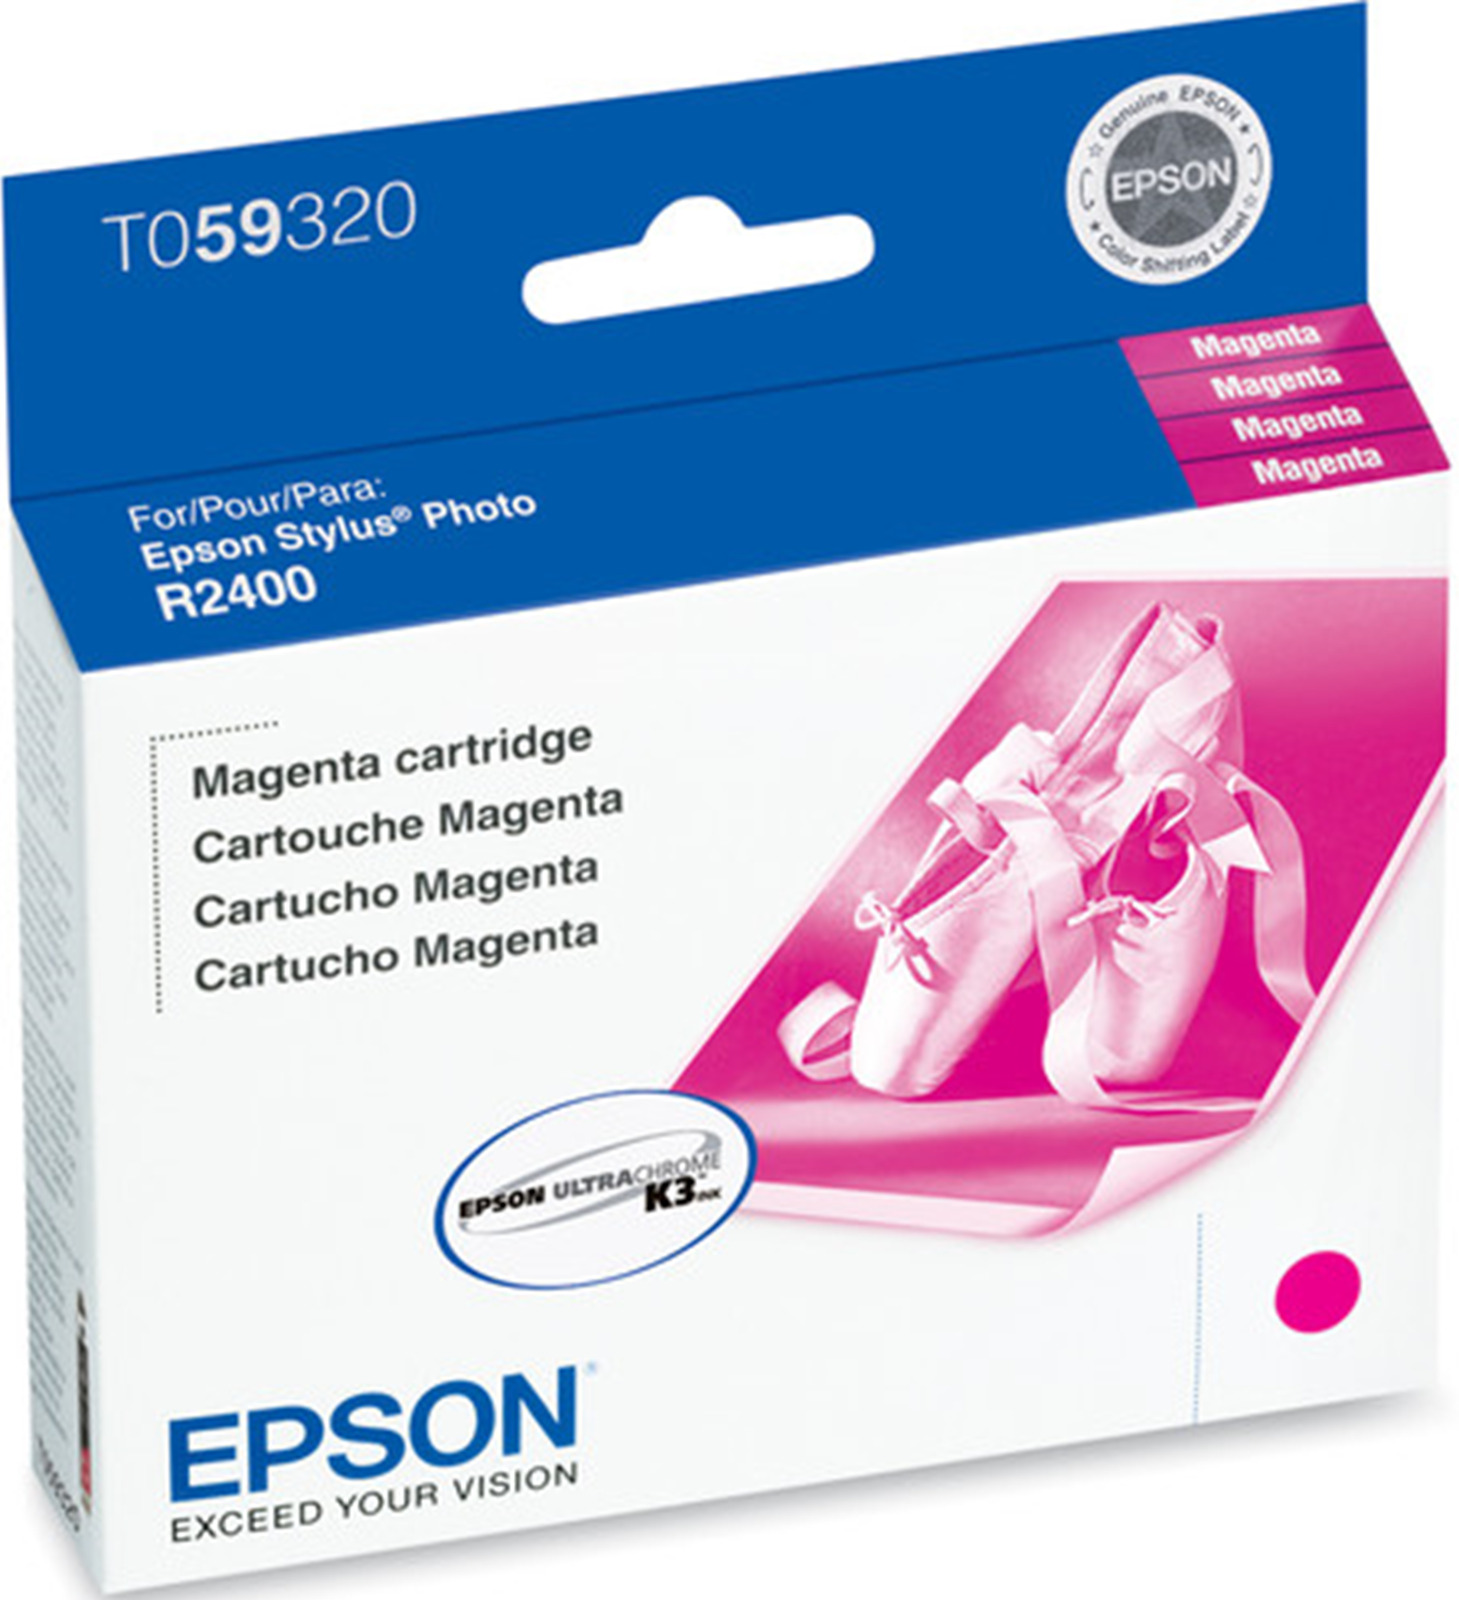 New Genuine Epson T0593 Magenta Ink Cartridge, Stylus Photo R2400